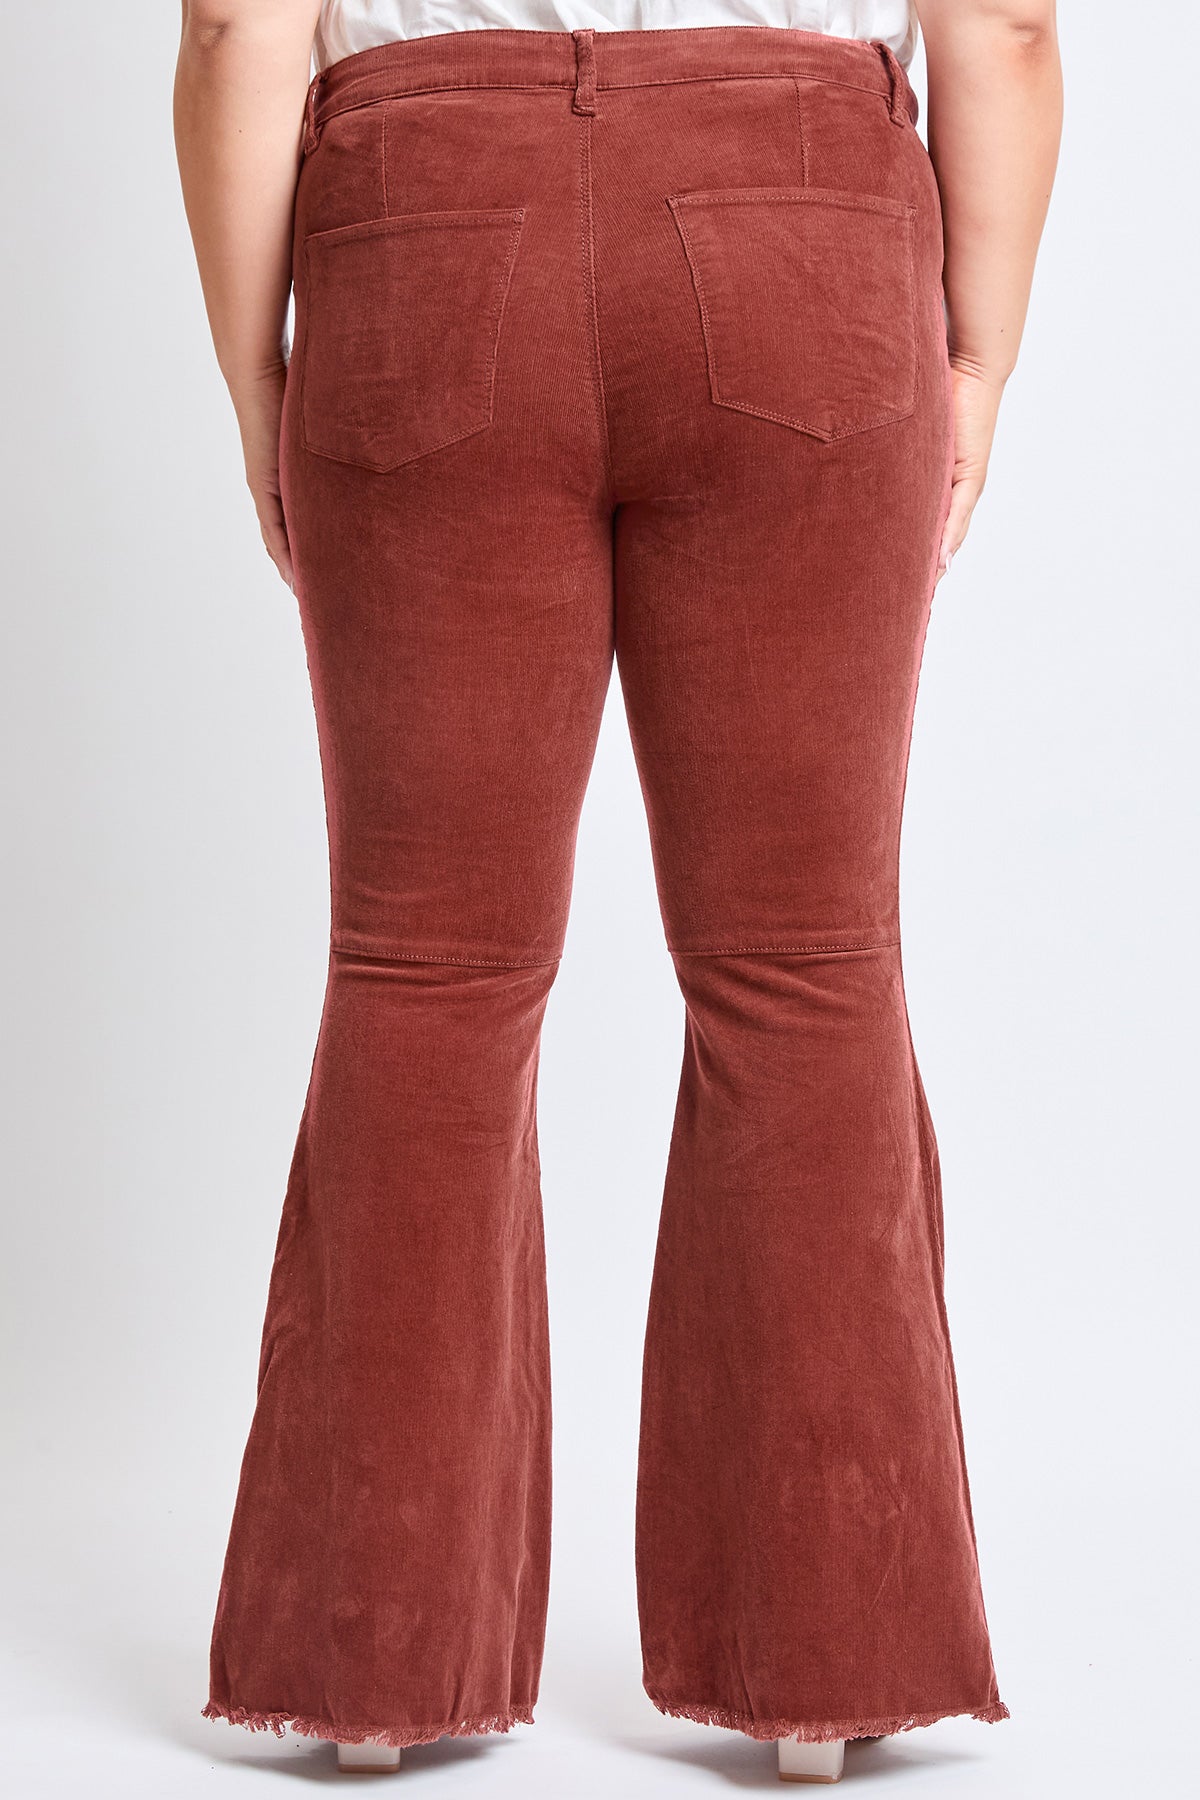 Plus Size Women's Corduroy Flare Pants